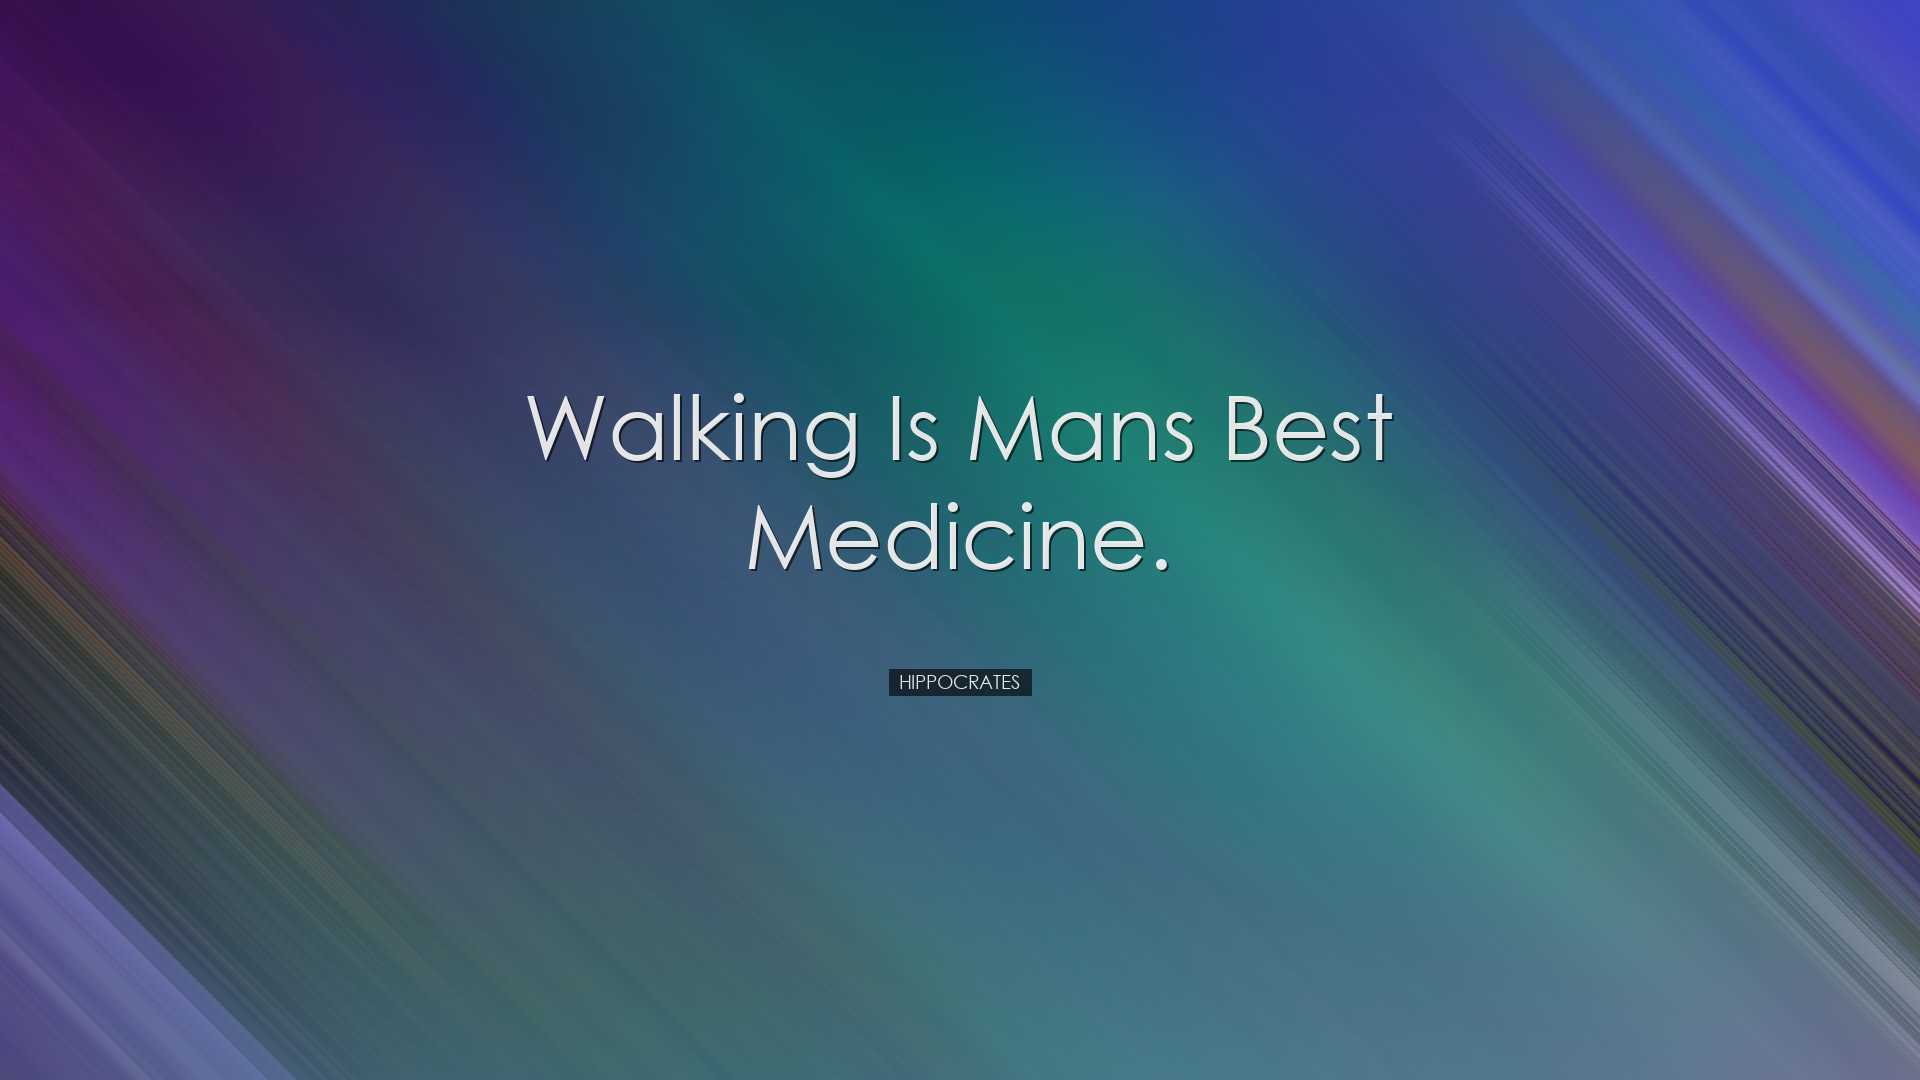 Walking is mans best medicine. - Hippocrates